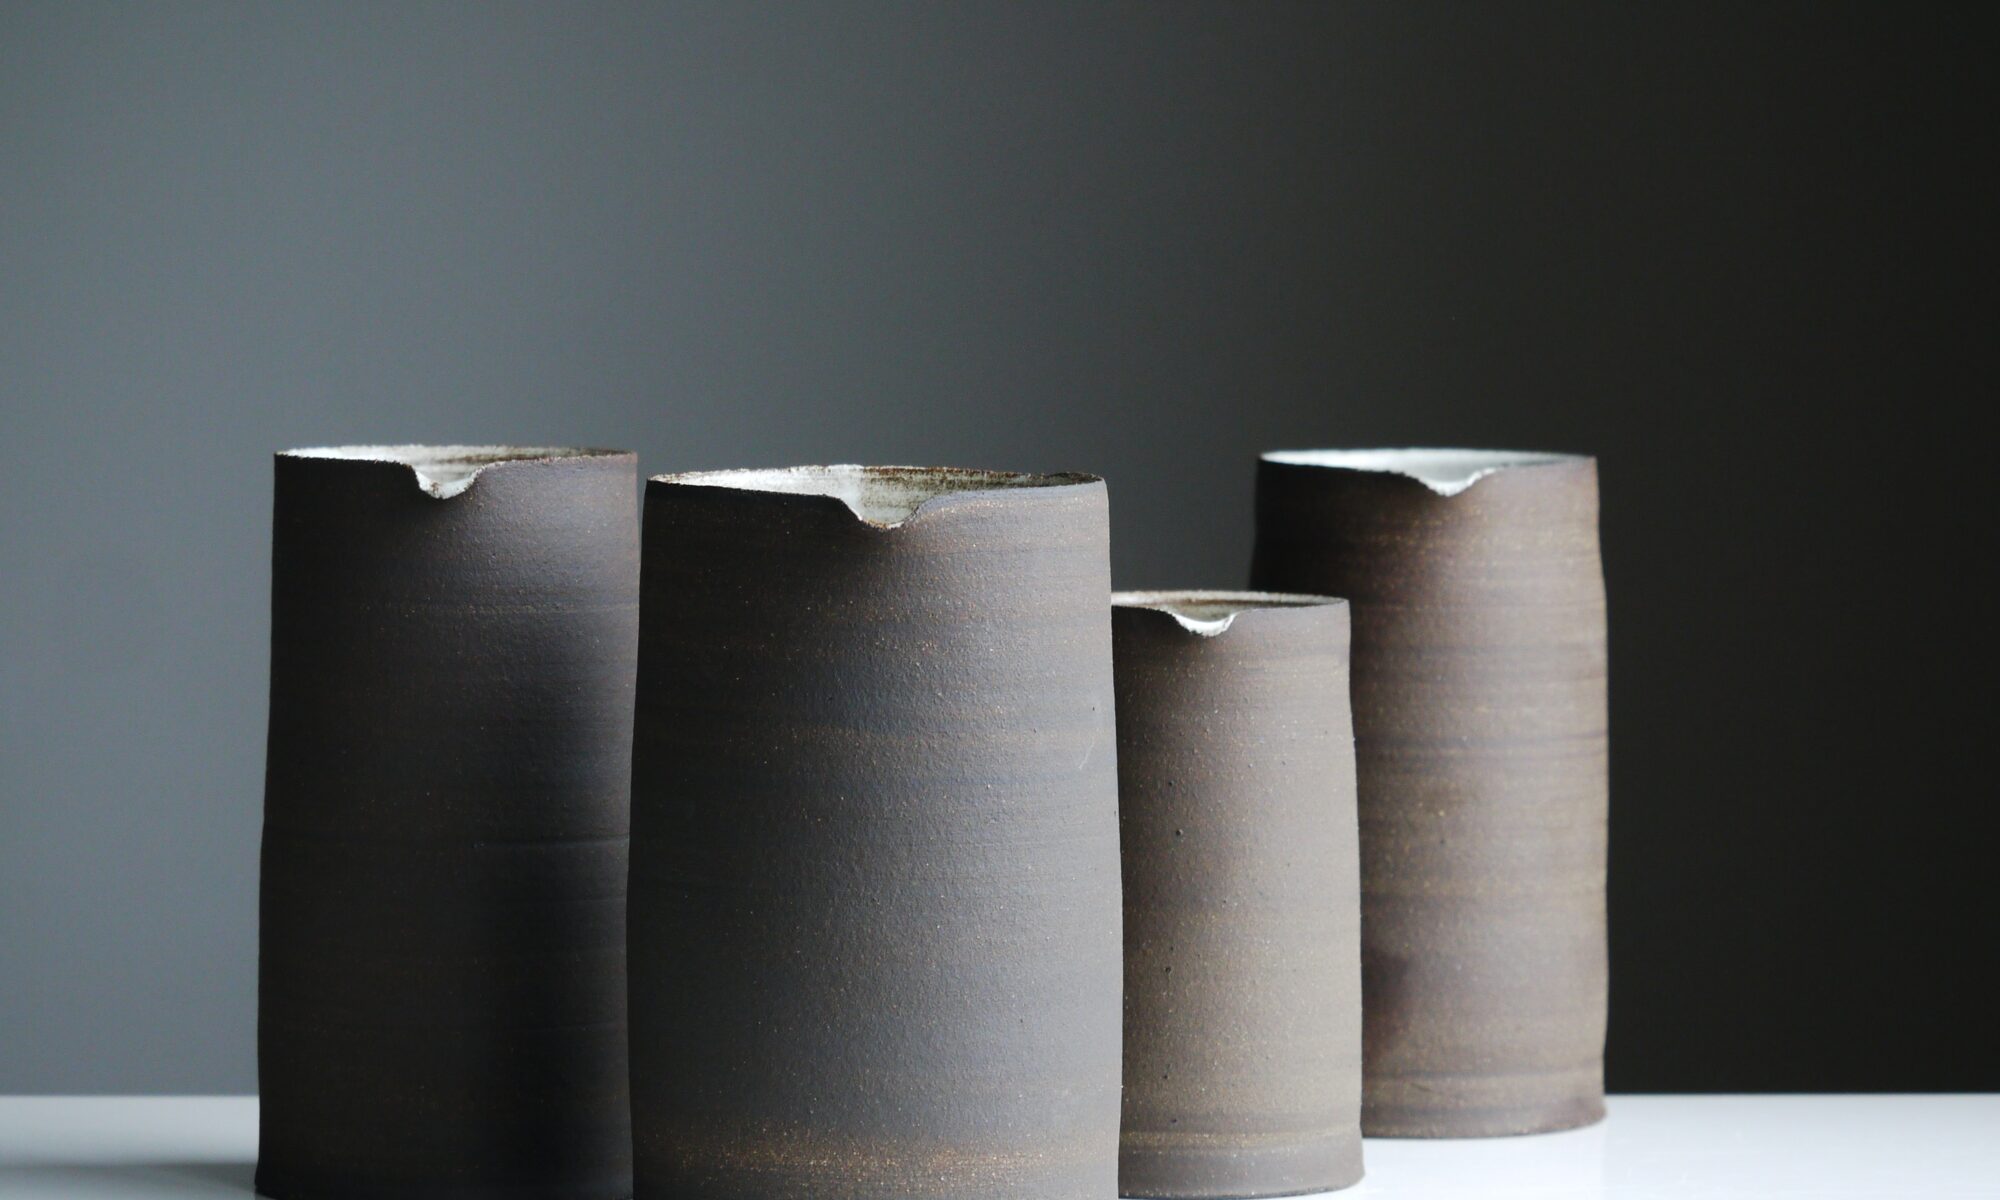 Ceramic pitchers